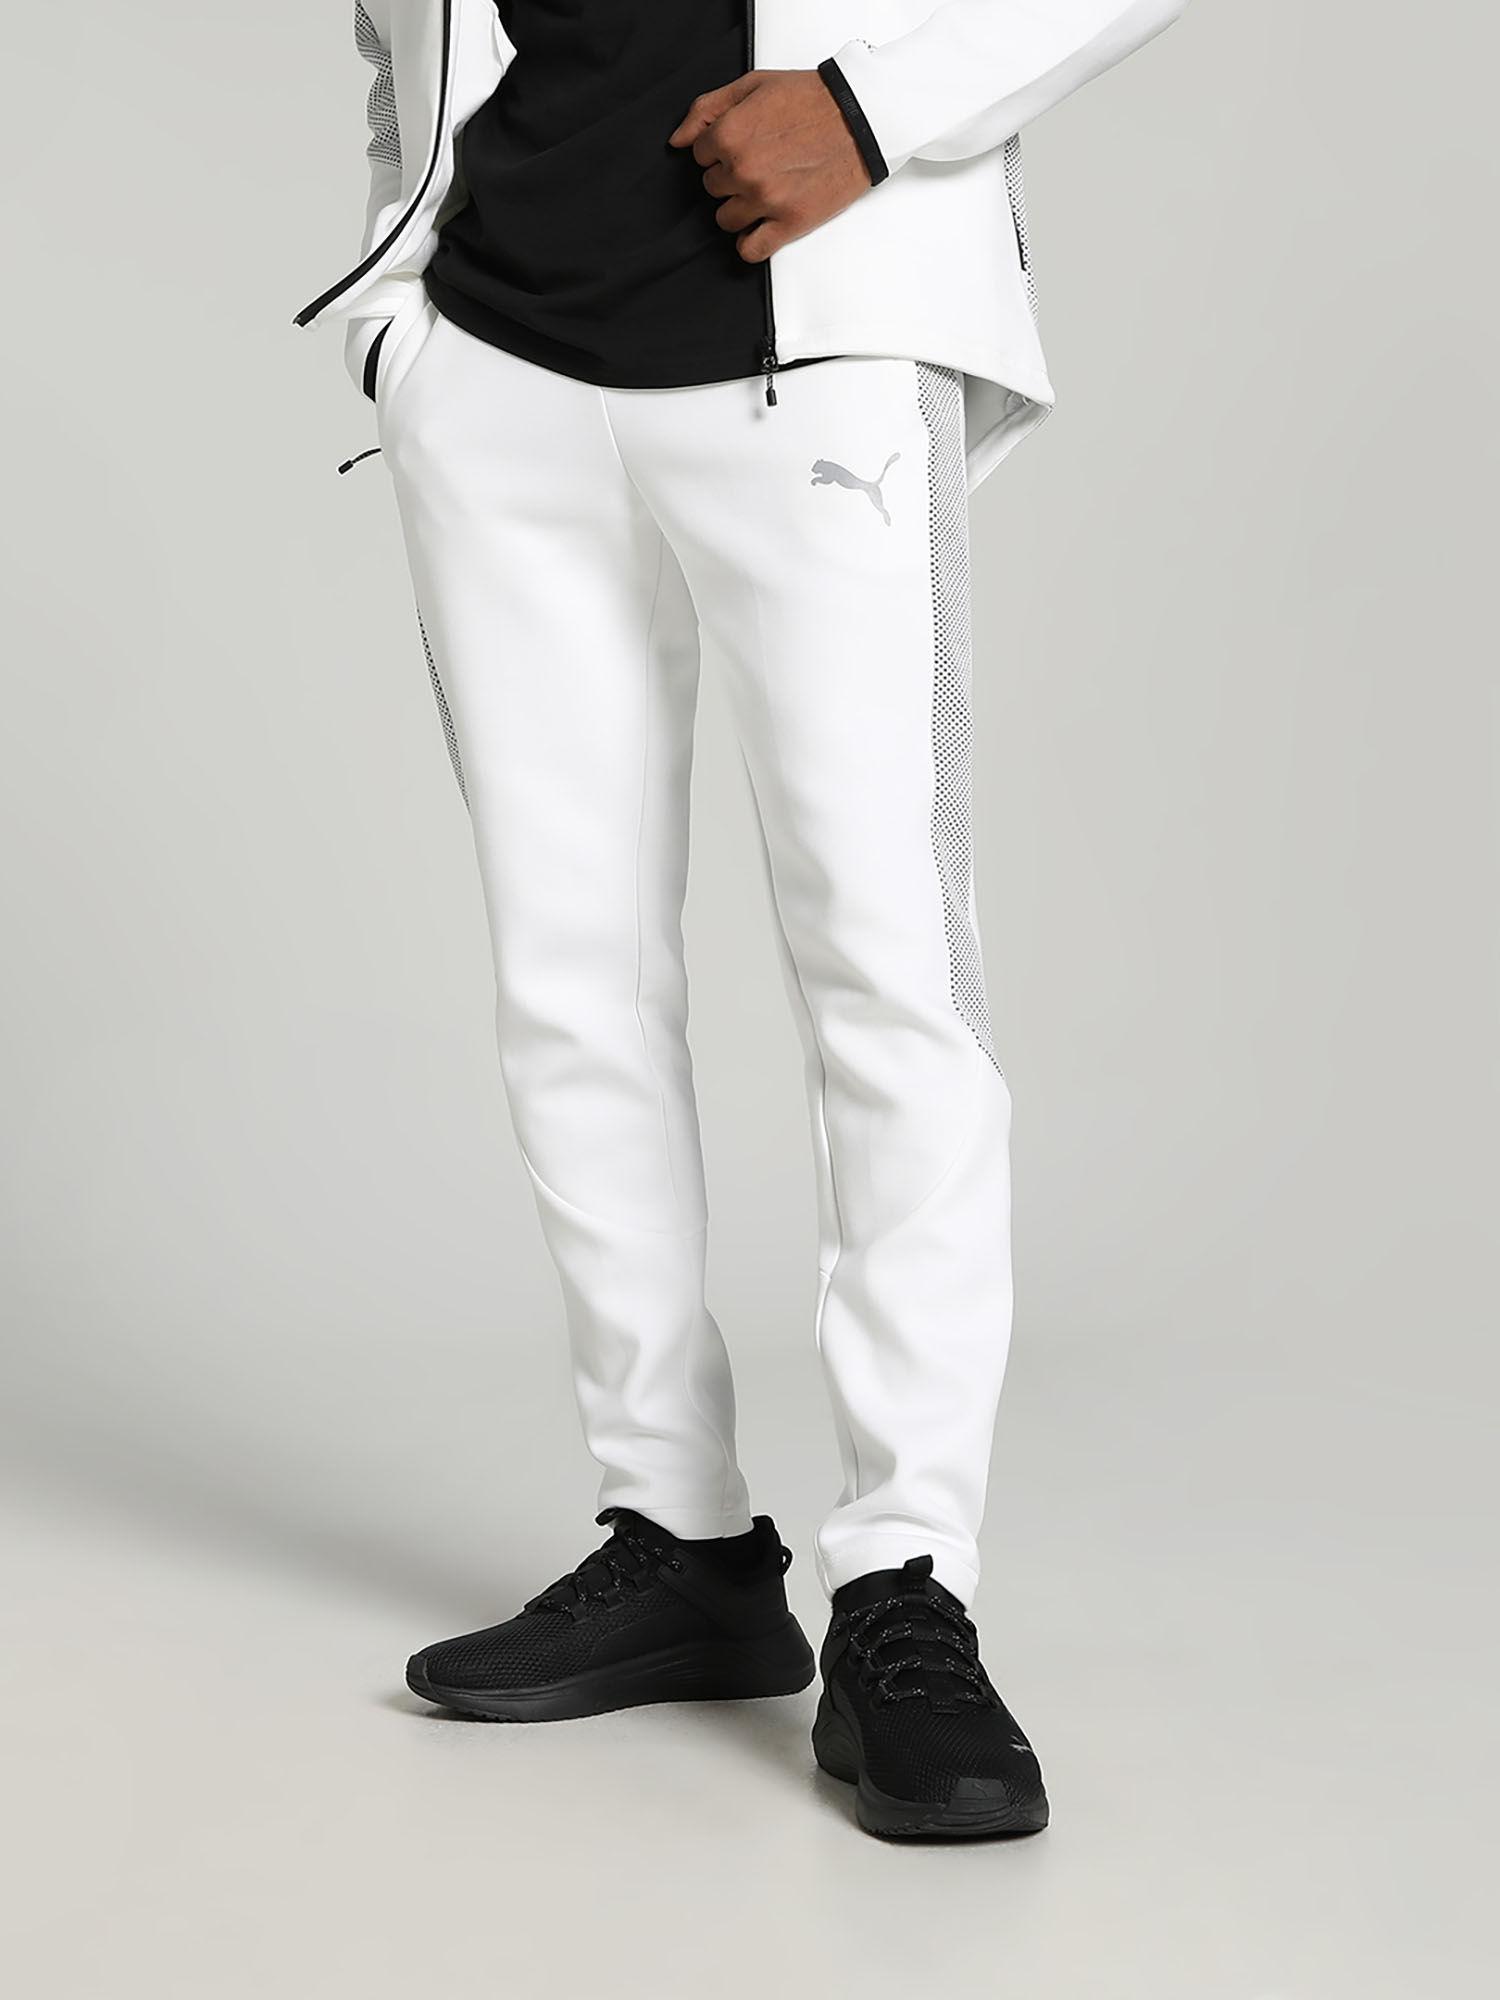 evo-solid-men's-white-pants